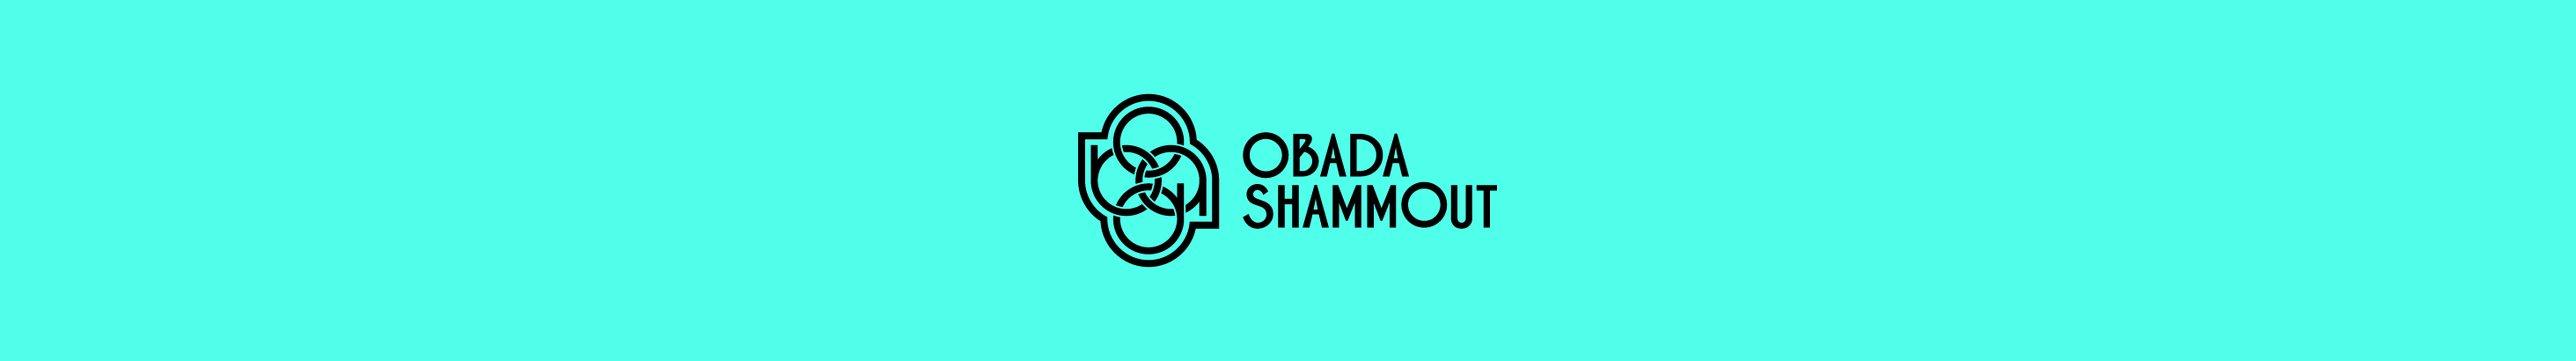 Obada Shammouts profilbanner